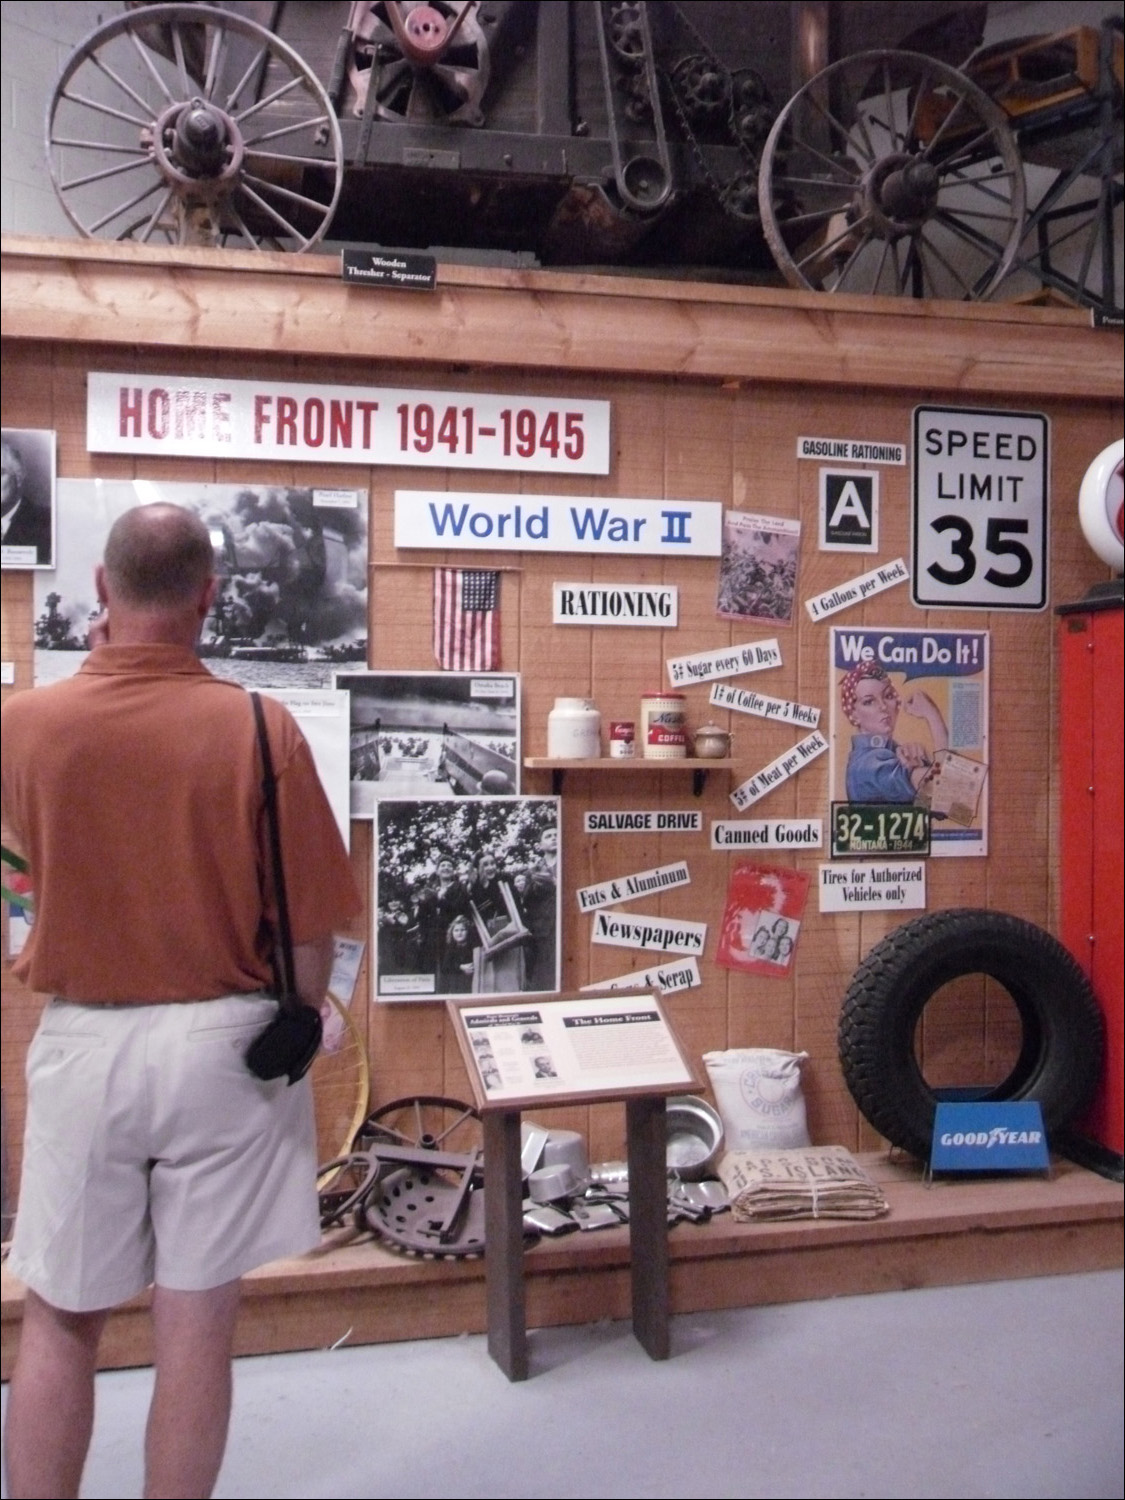 Fort Benton, MT Agriculture Museum-WWII exhibit